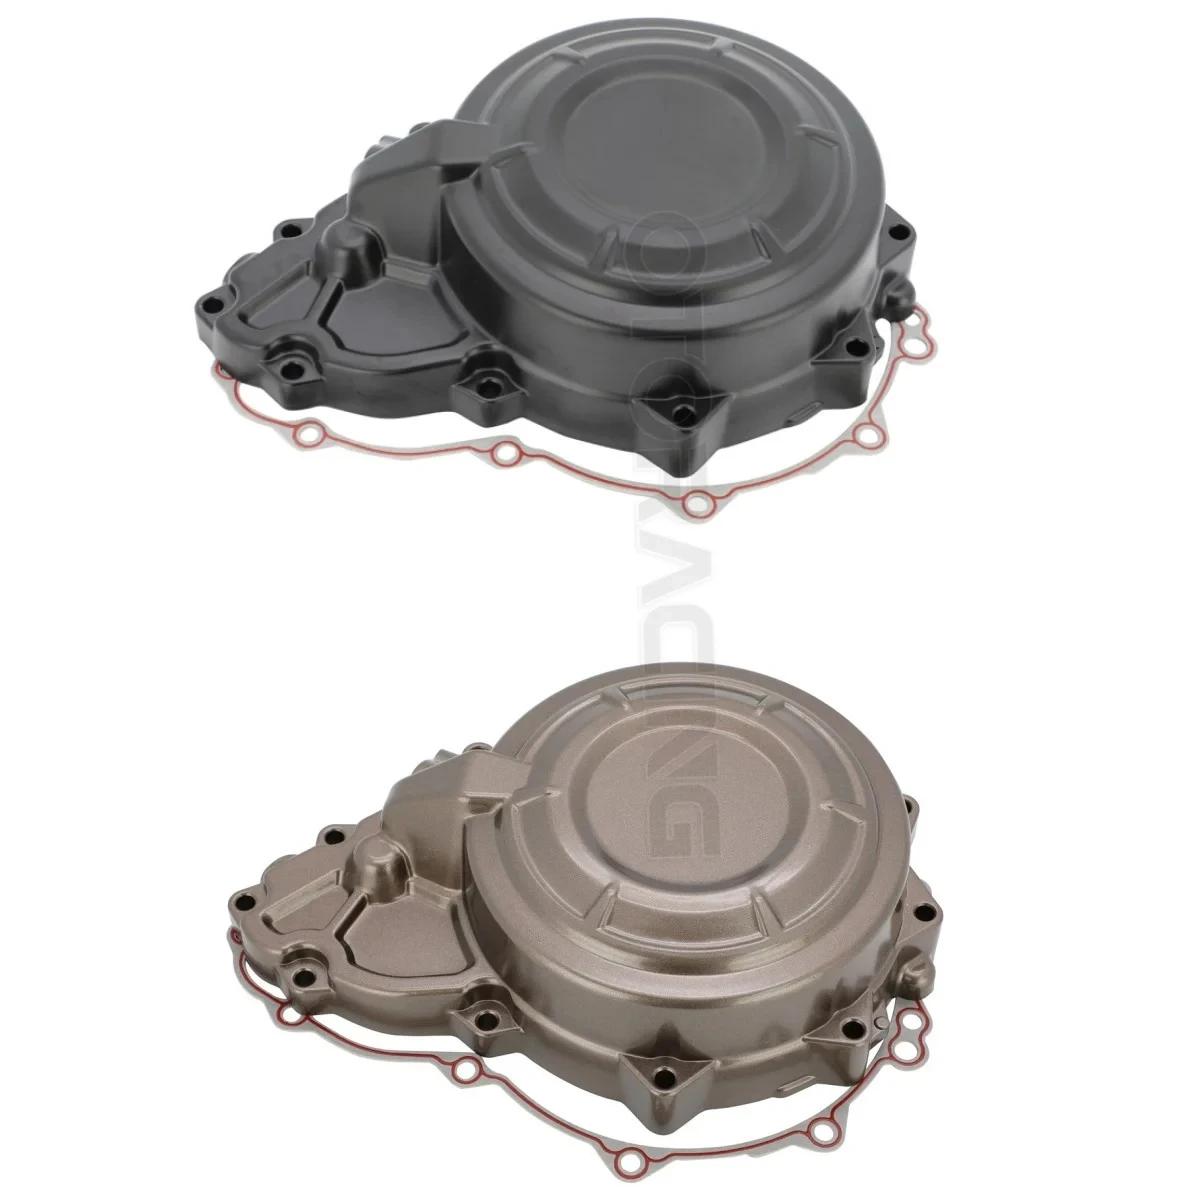 

Motorcycle Engine Stator Cover Crankcase Shell Gasket For Honda CB500F CB 500F 500 F CBR500R CBR 500R 2019 2020 2021